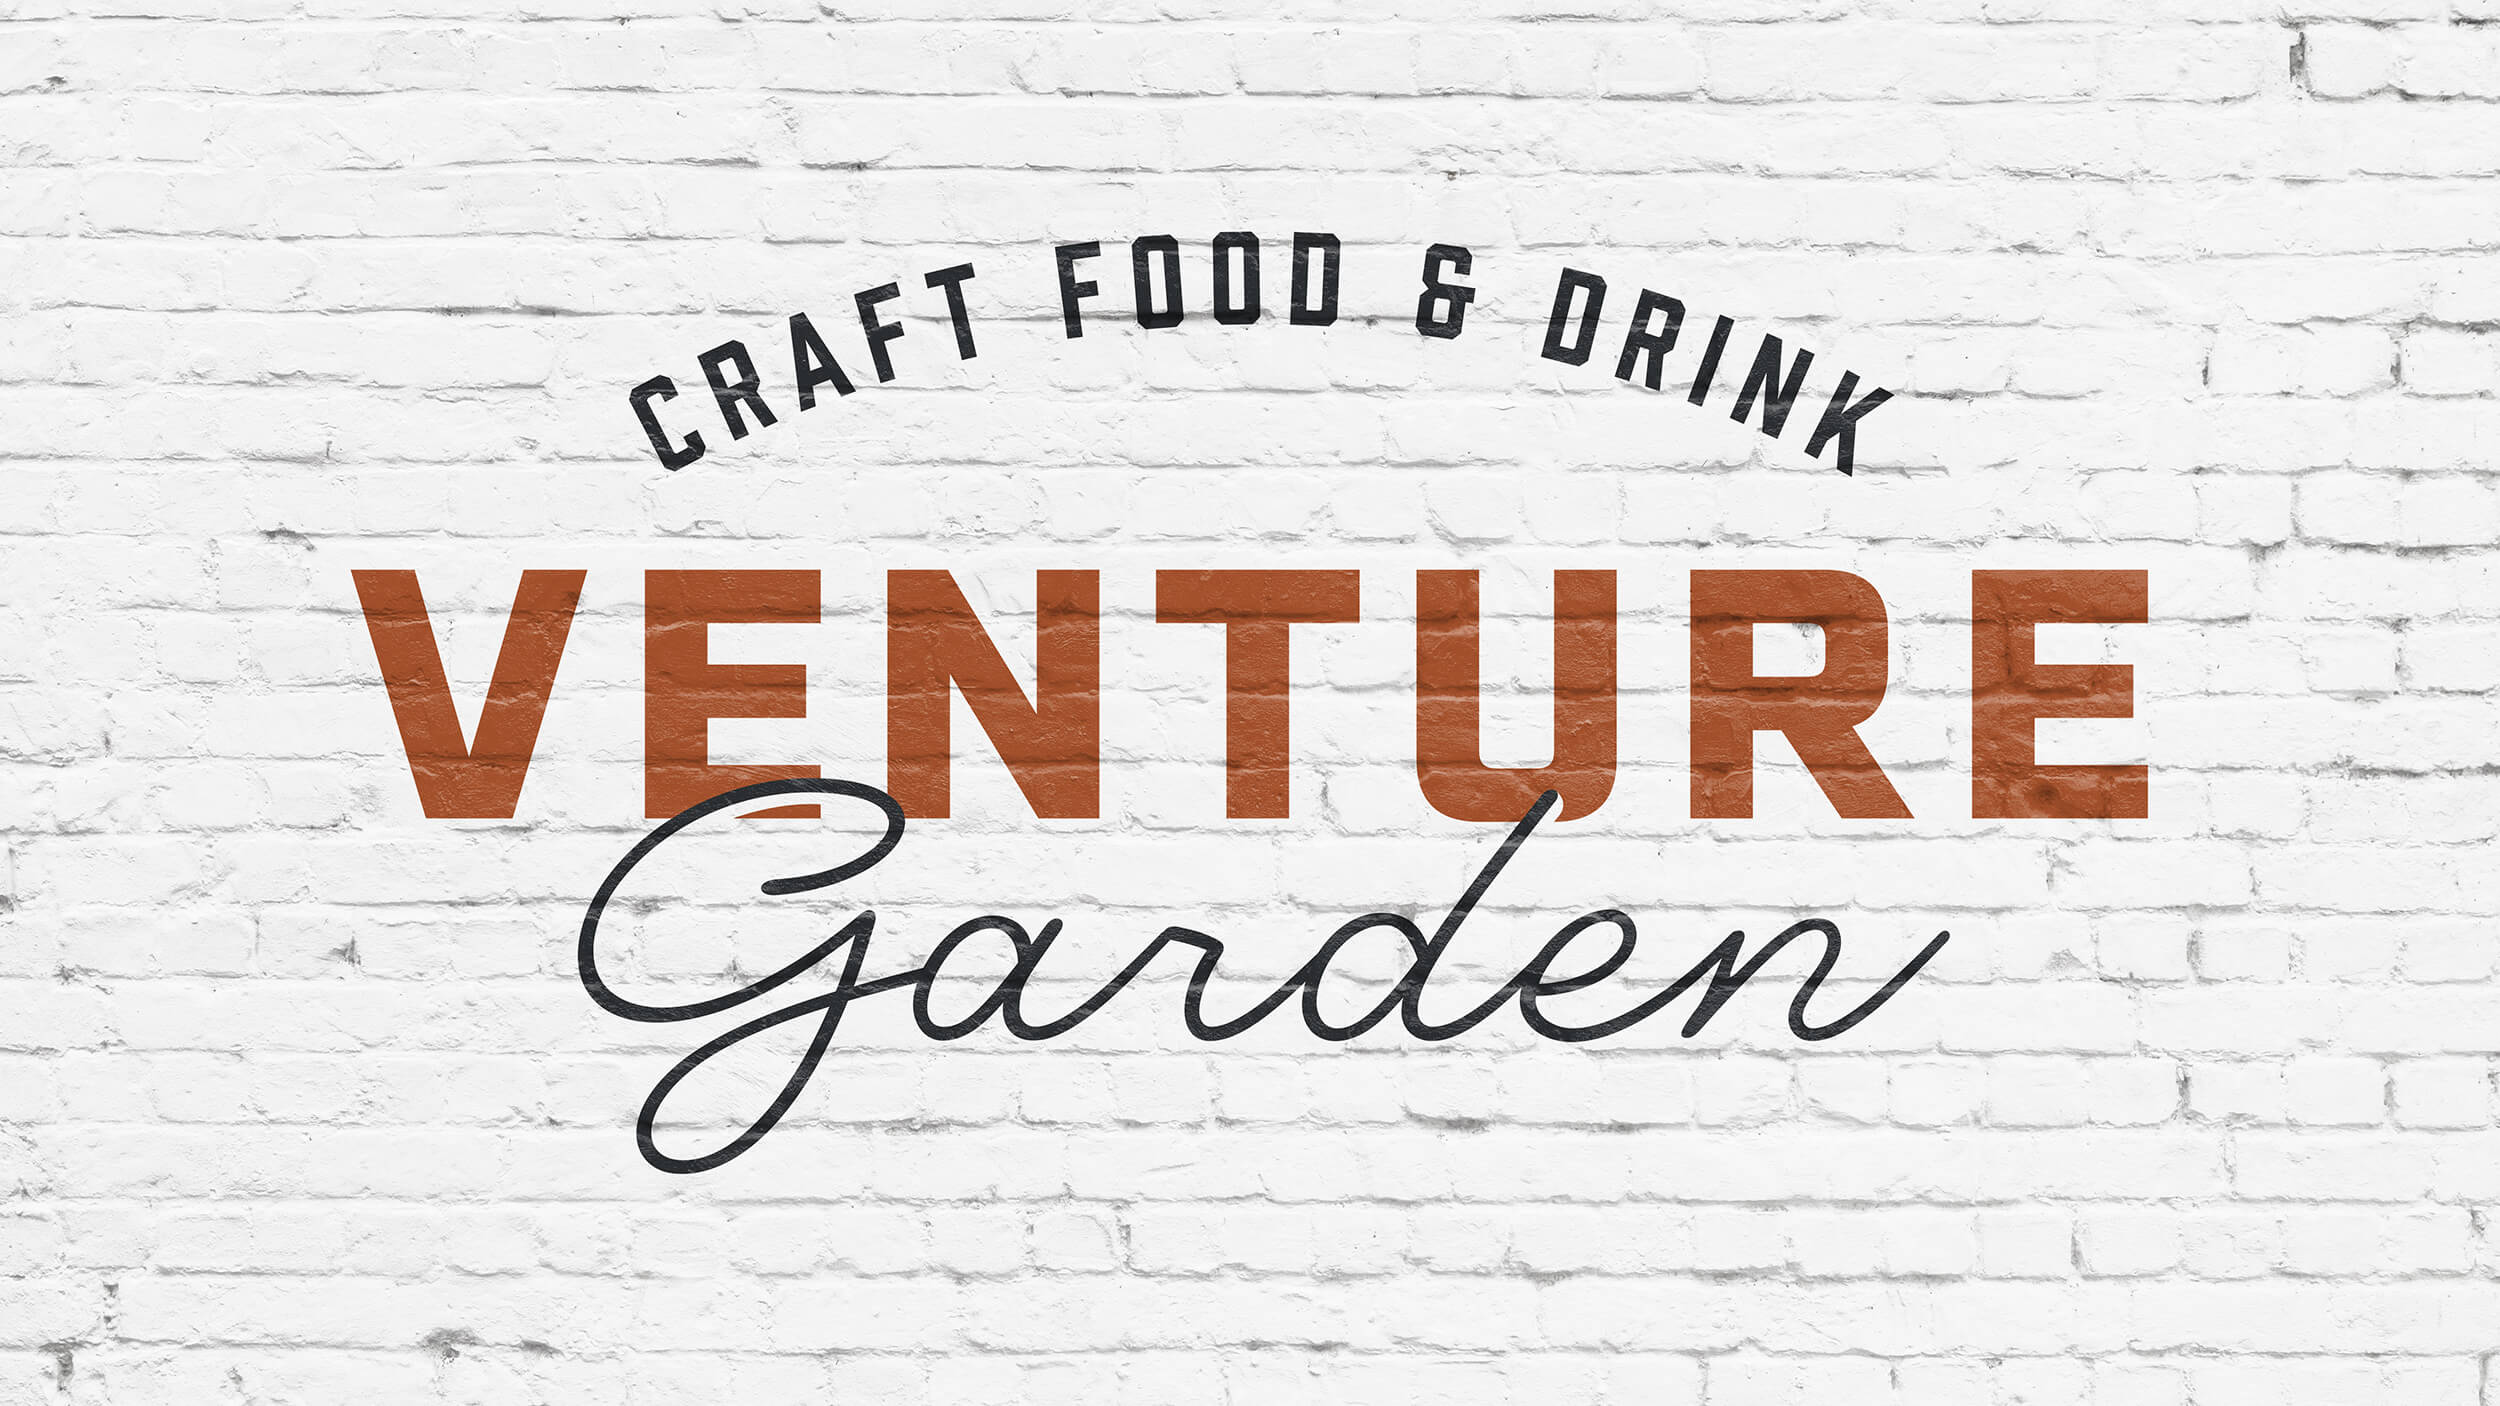 Venture Garden typography lockup with craft food & drink tagline on brick wall